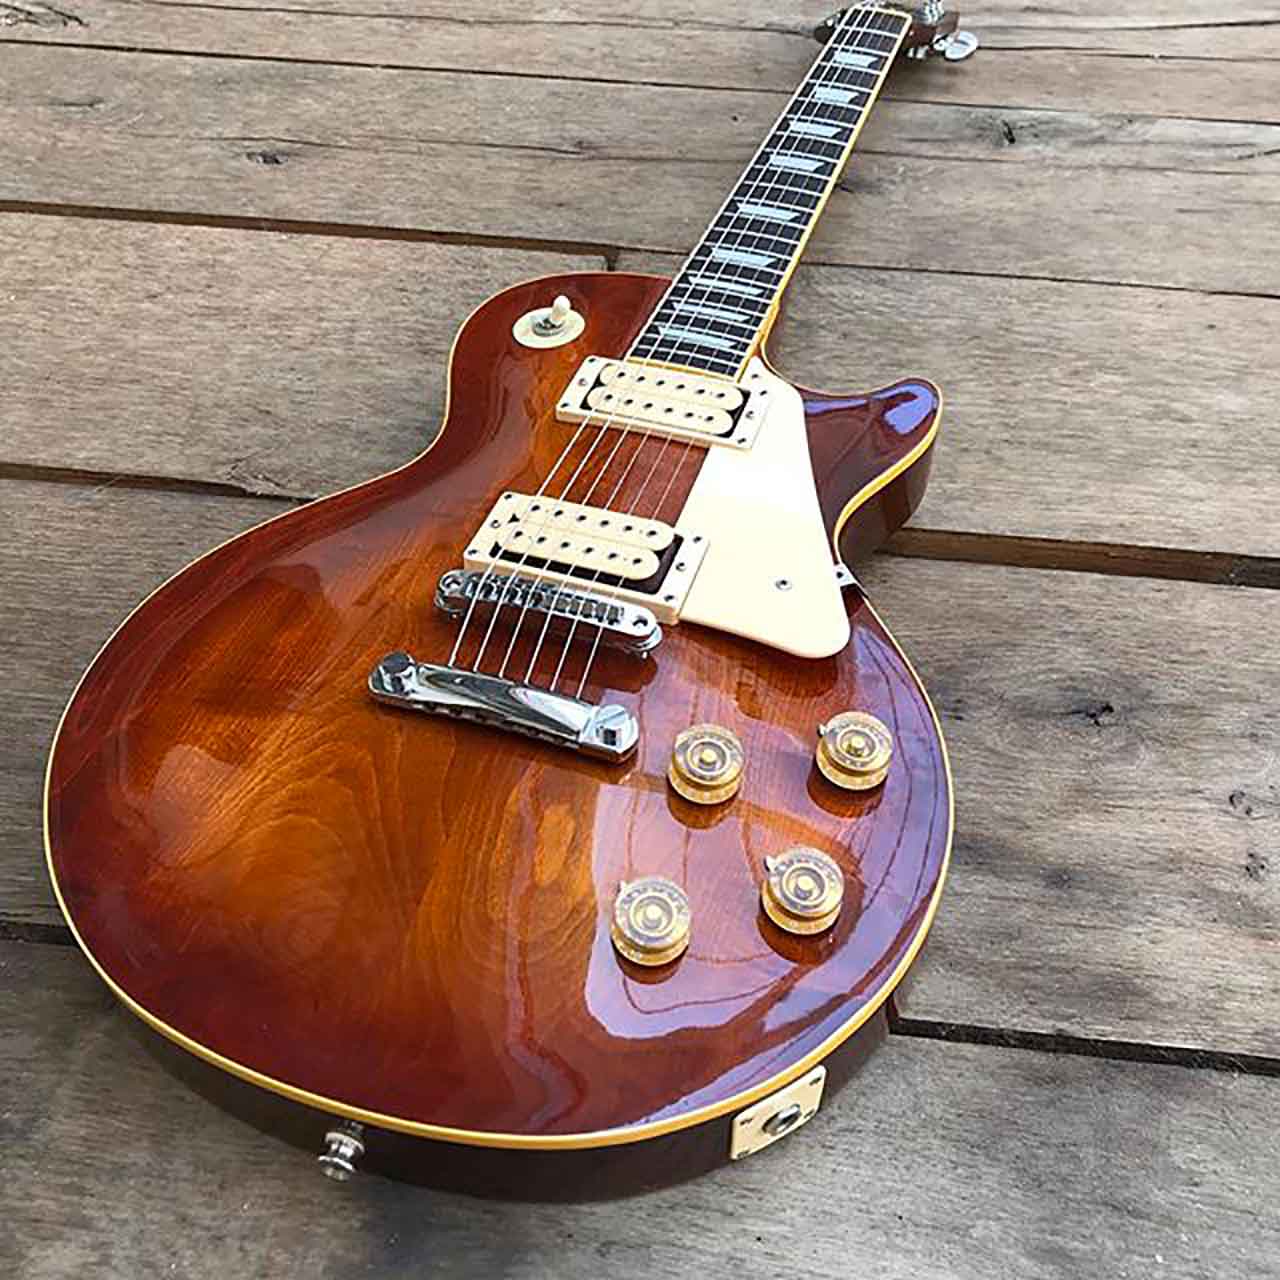 Vintage Japan Guitars joined Luthiers.com